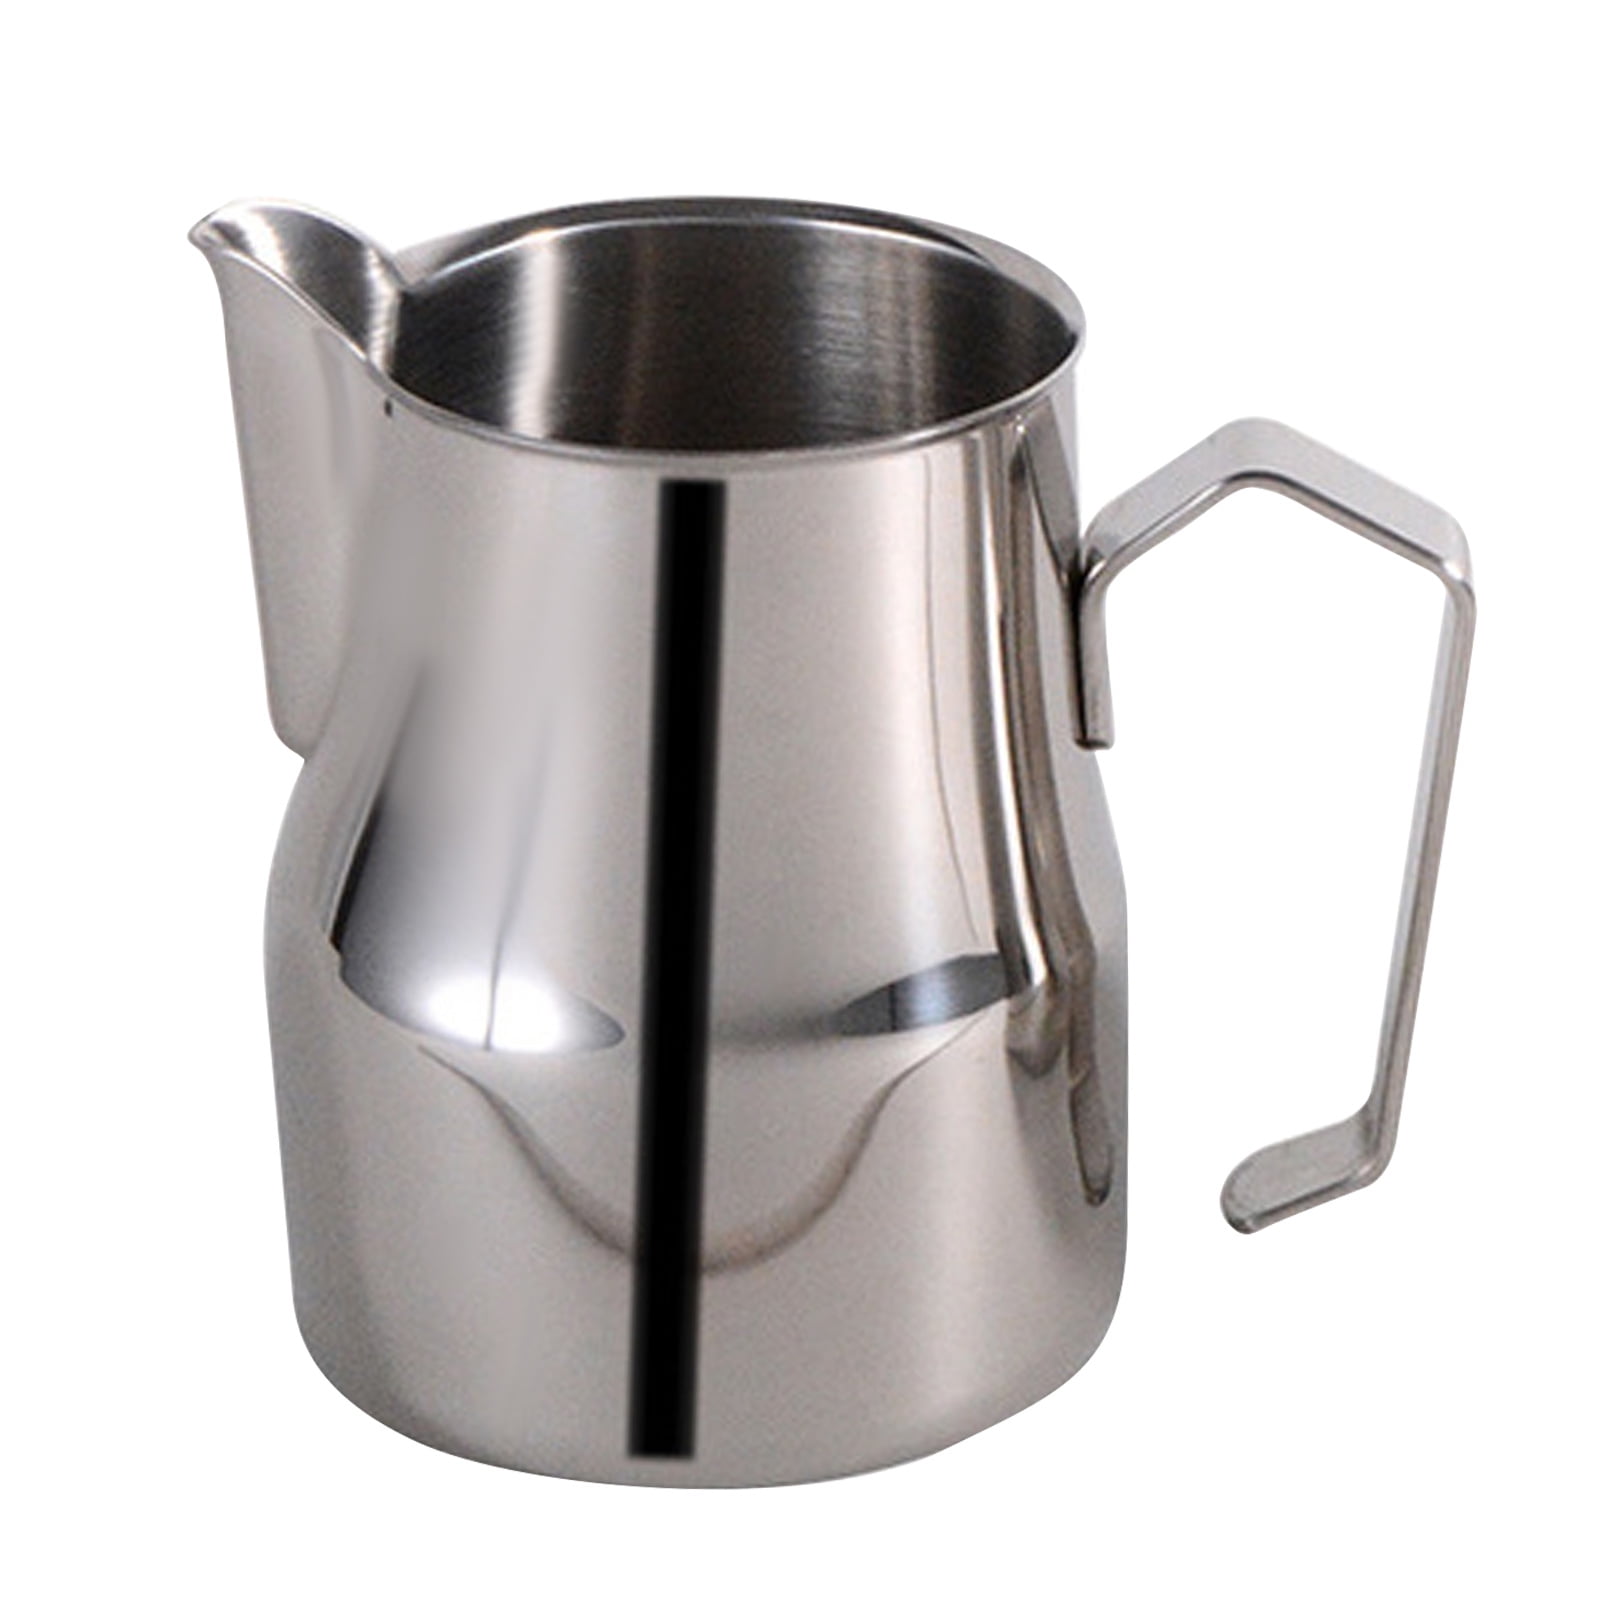 500 ml Milk Jug Pitcher Space Home Milk Jug in Stainless Steel Silver Frothing Jug